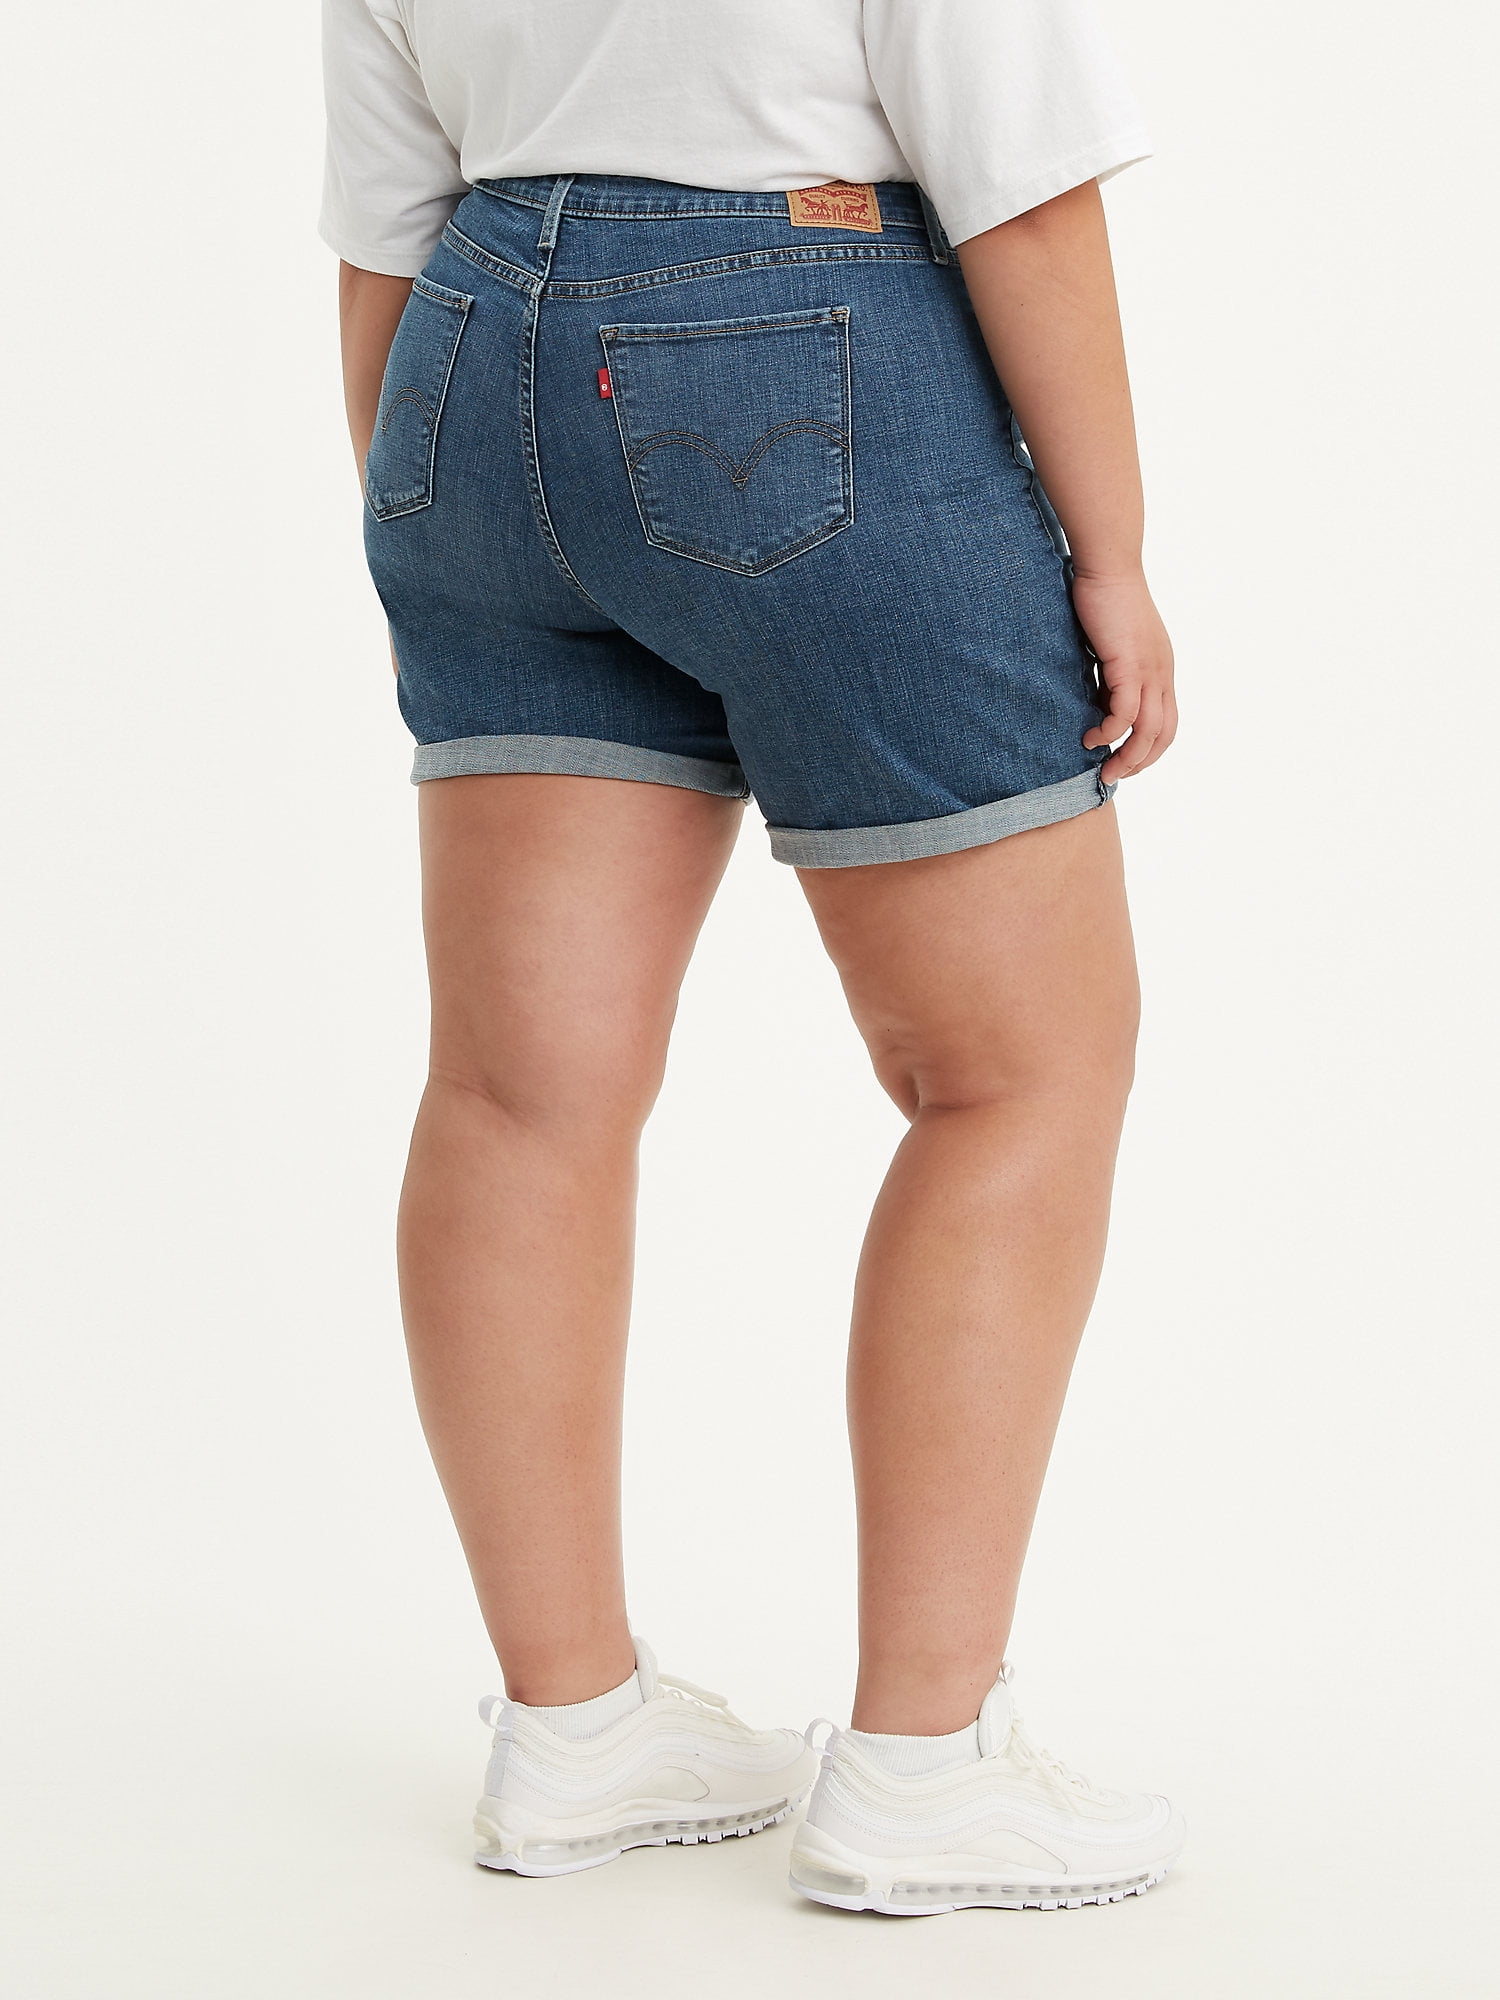 Levi's Women's Plus Size New Jean Shorts 